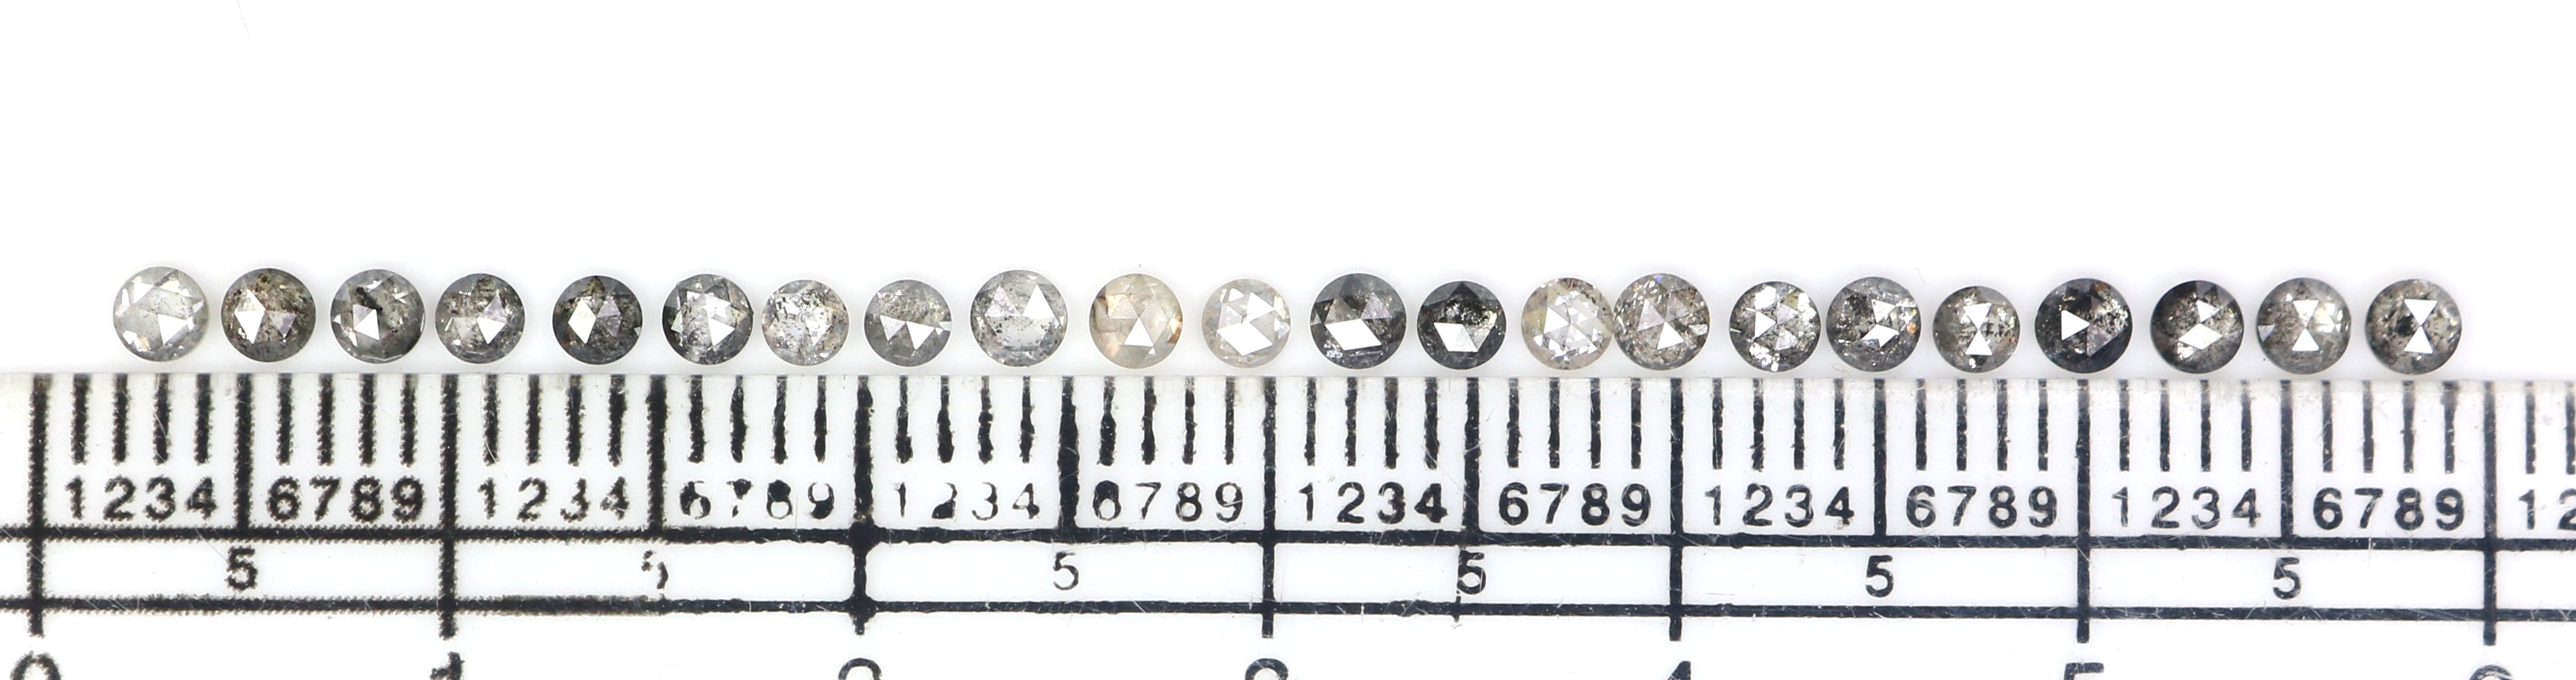 Natural Loose Round Rose Cut Diamond, Salt And Pepper Round Diamond, Natural Loose Diamond, Rose Cut Diamond, 1.34 CT Round Shape L2771